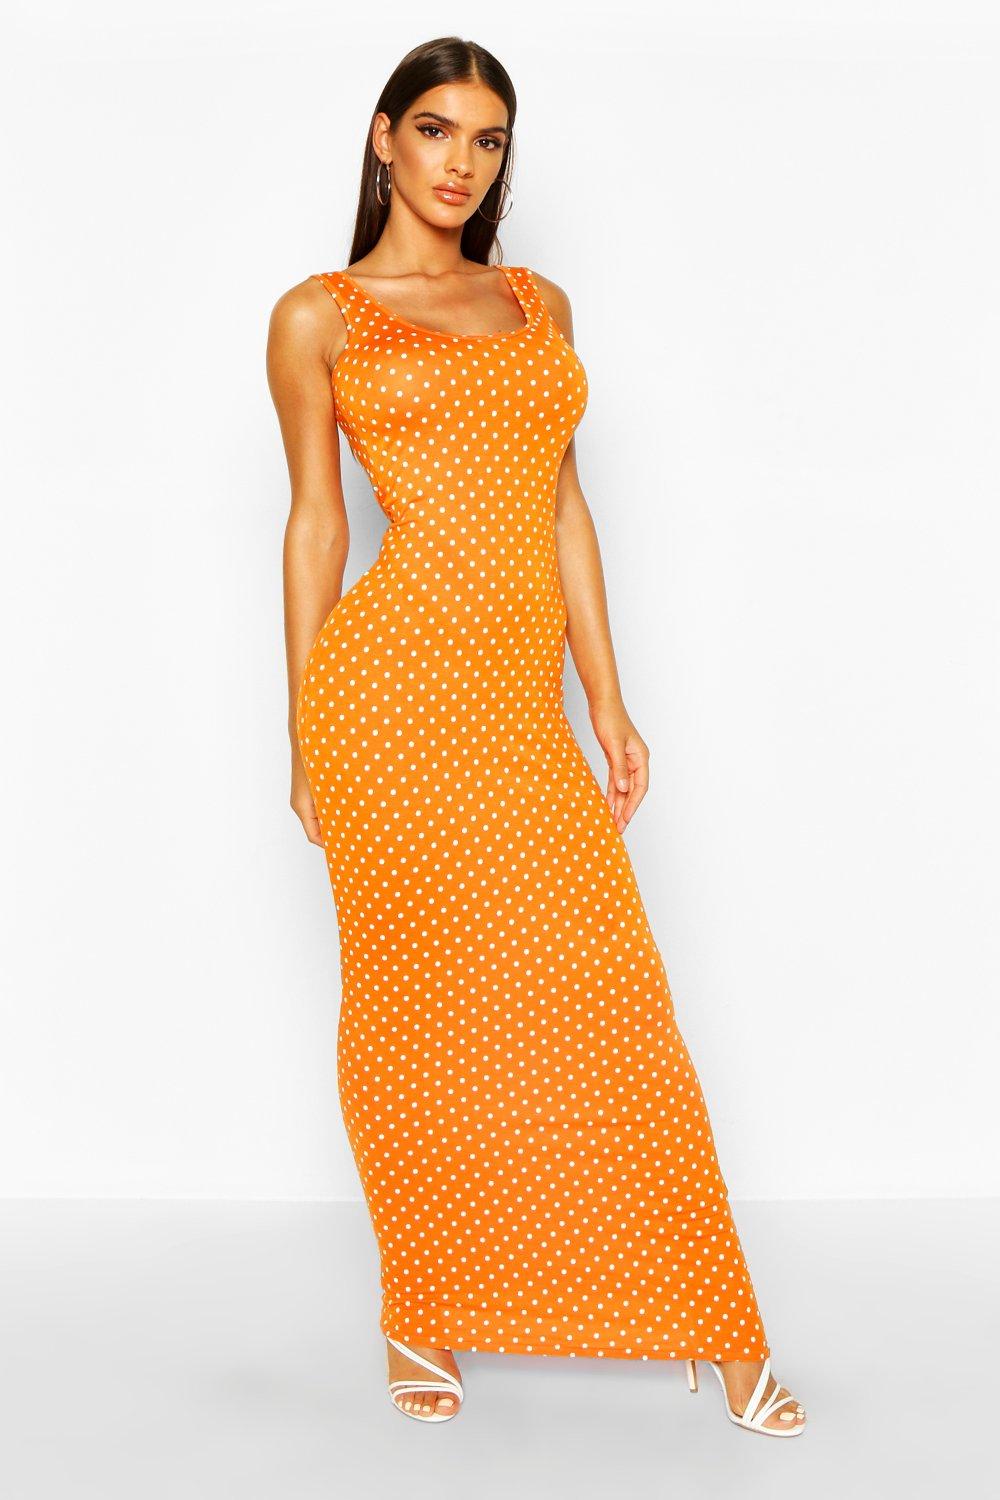 orange dress canada